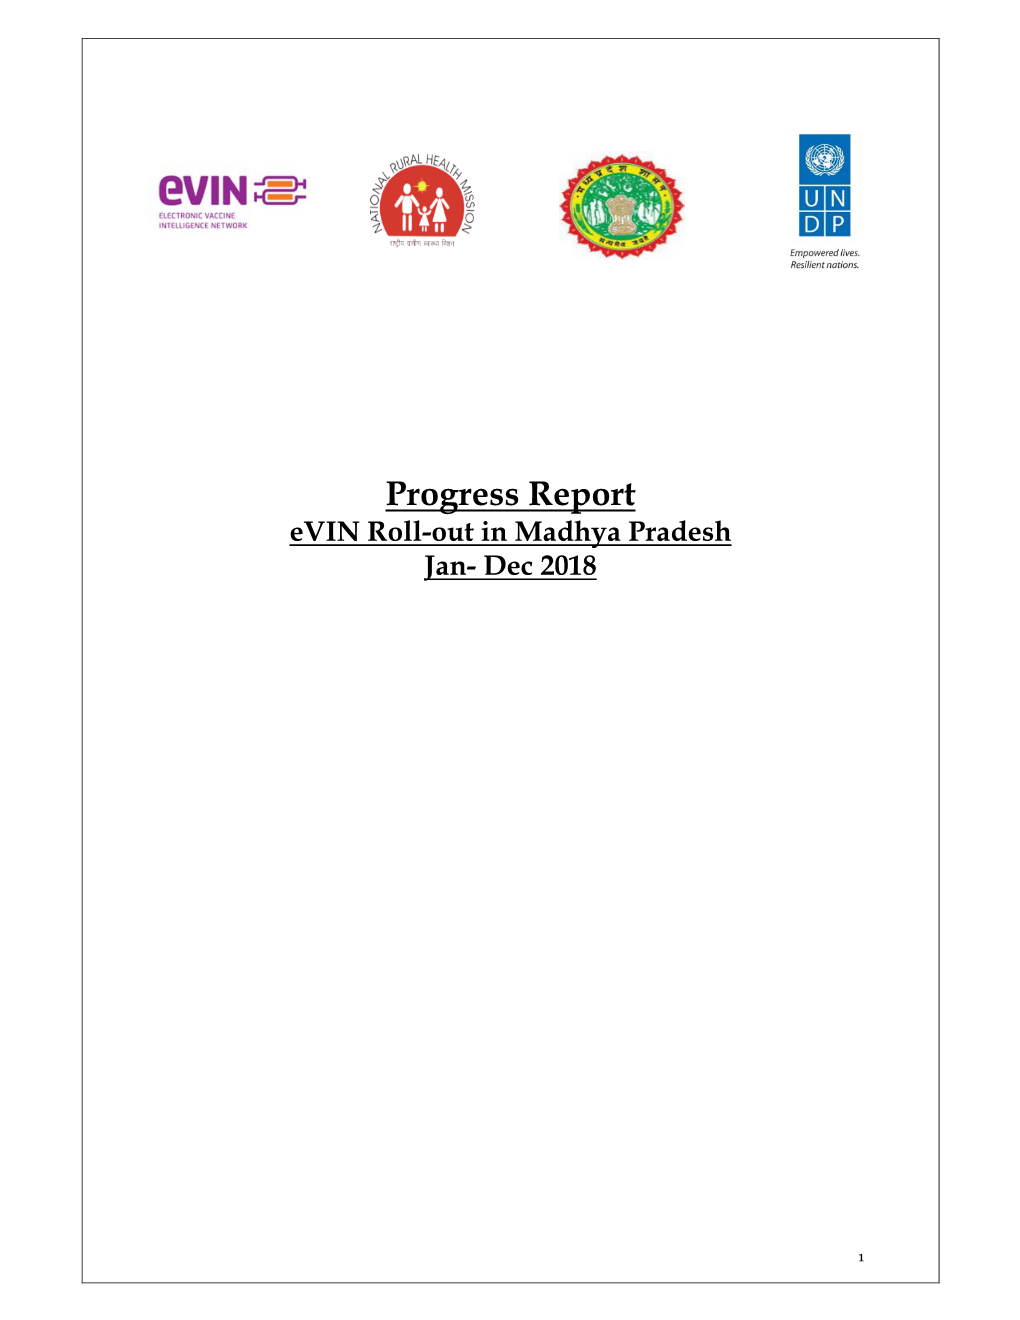 2018 Annual Progress Report Evin Implementation in Madhya Pradesh